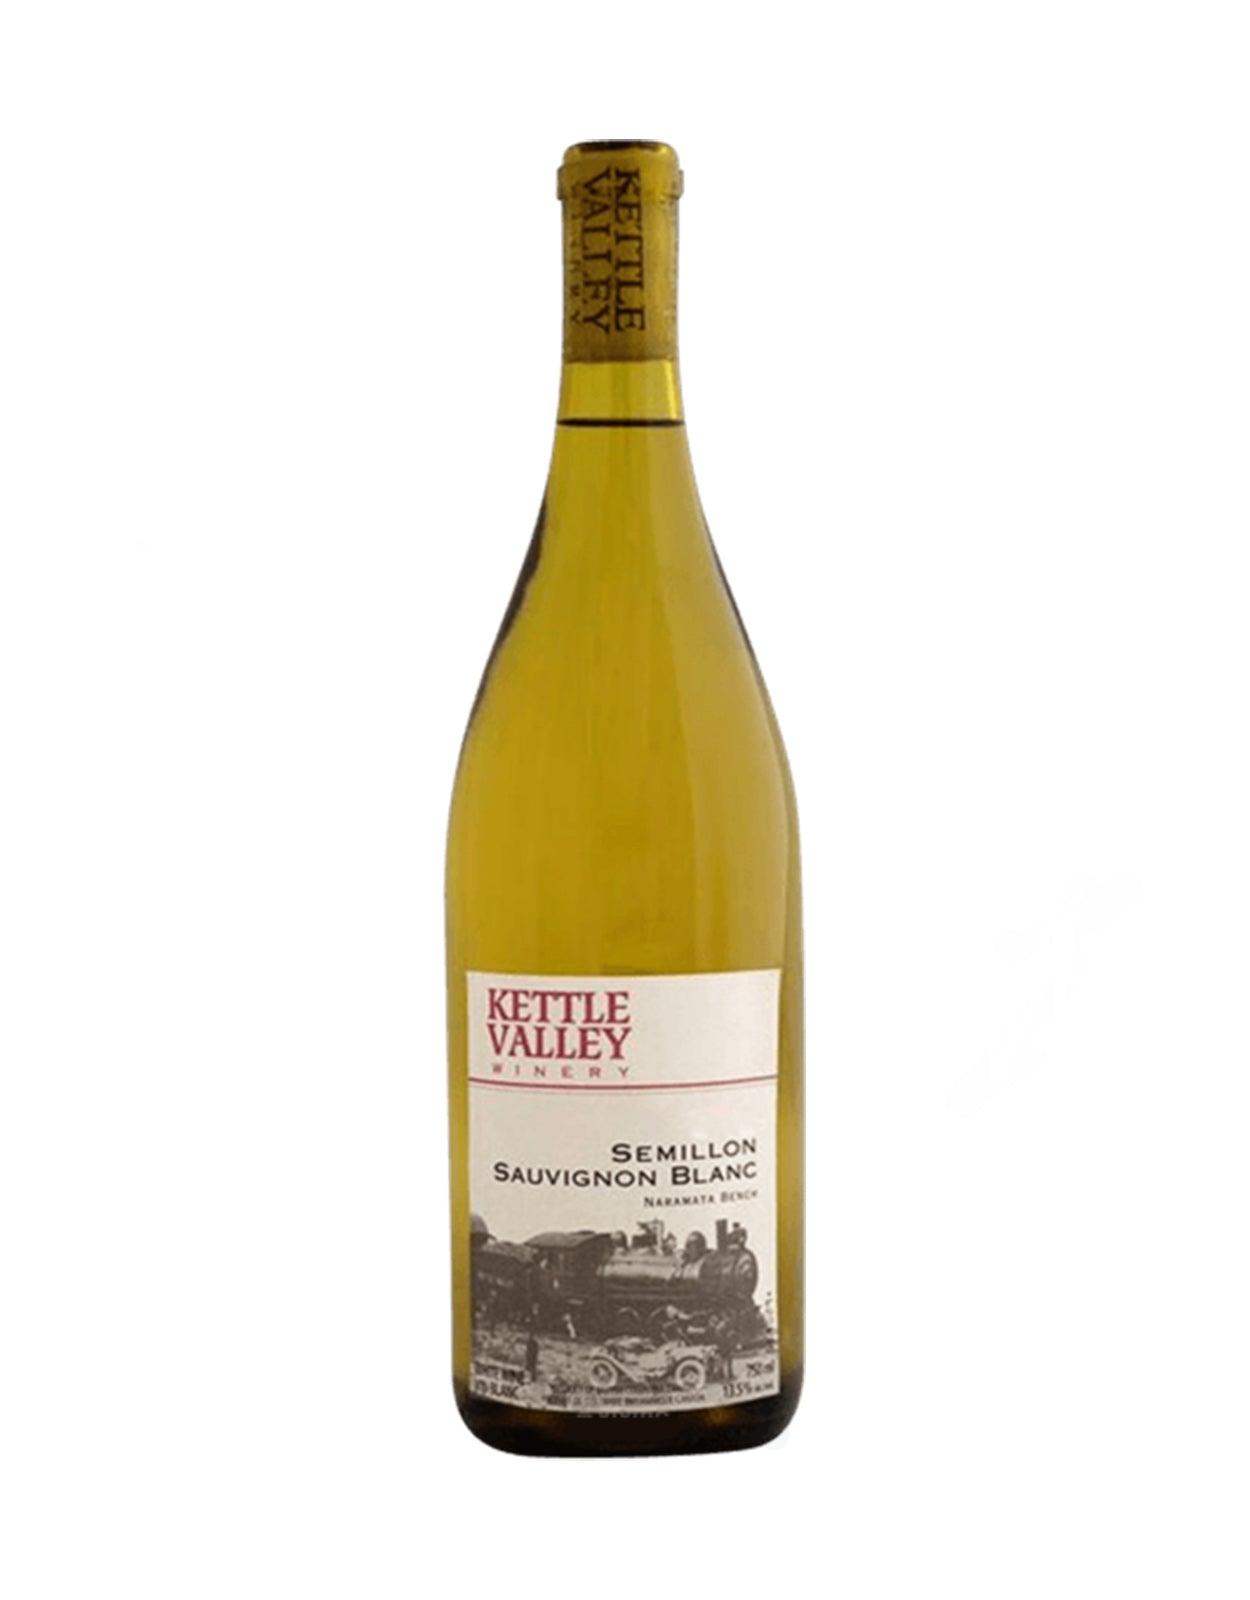 Kettle Valley Semillon - Sauvignon Blanc - 375 ml